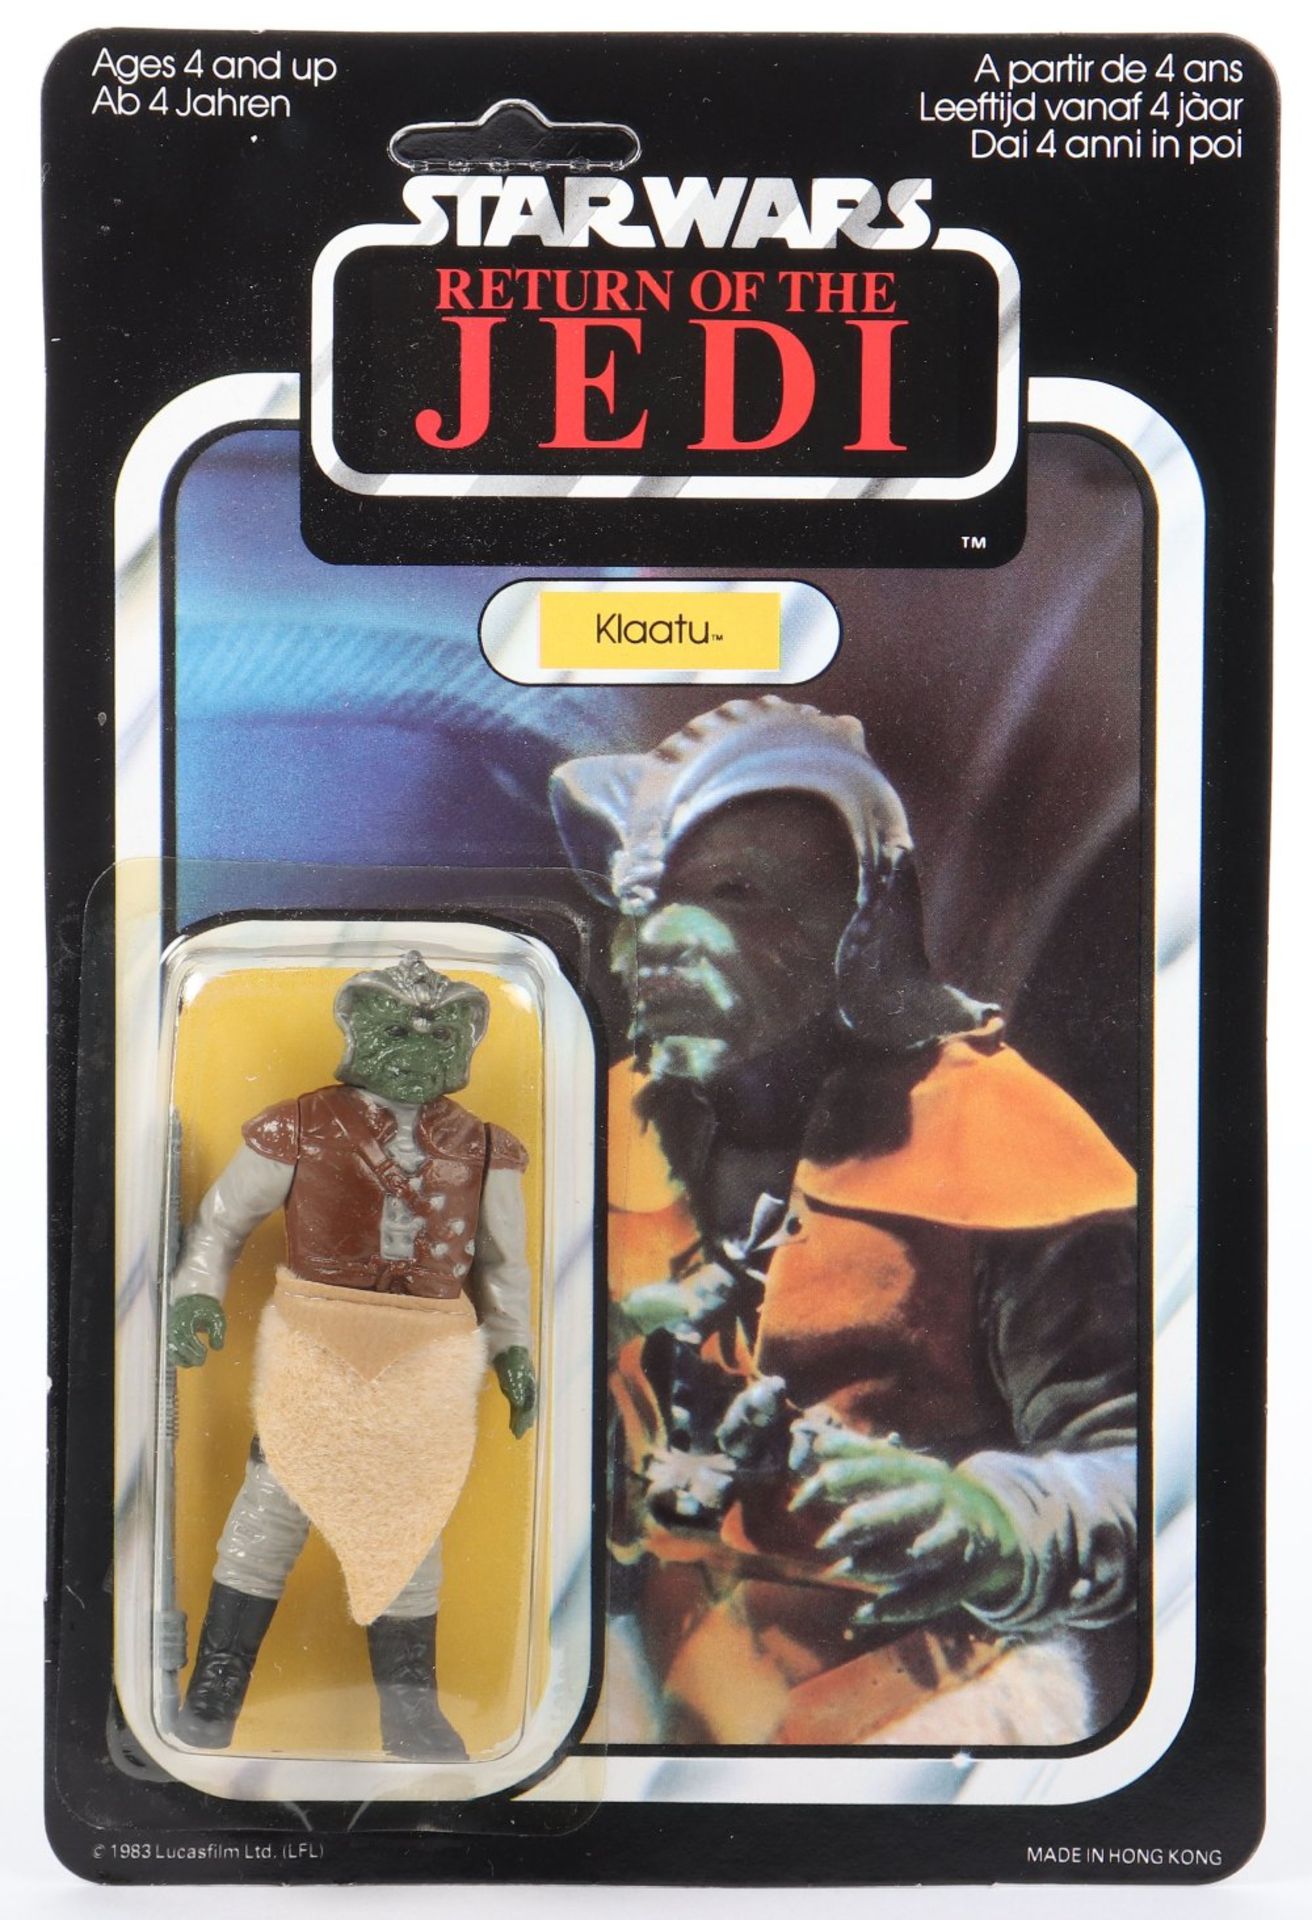 Palitoy General Mills Star Wars Return of The Jedi Klaatu, Vintage Original Carded Figure